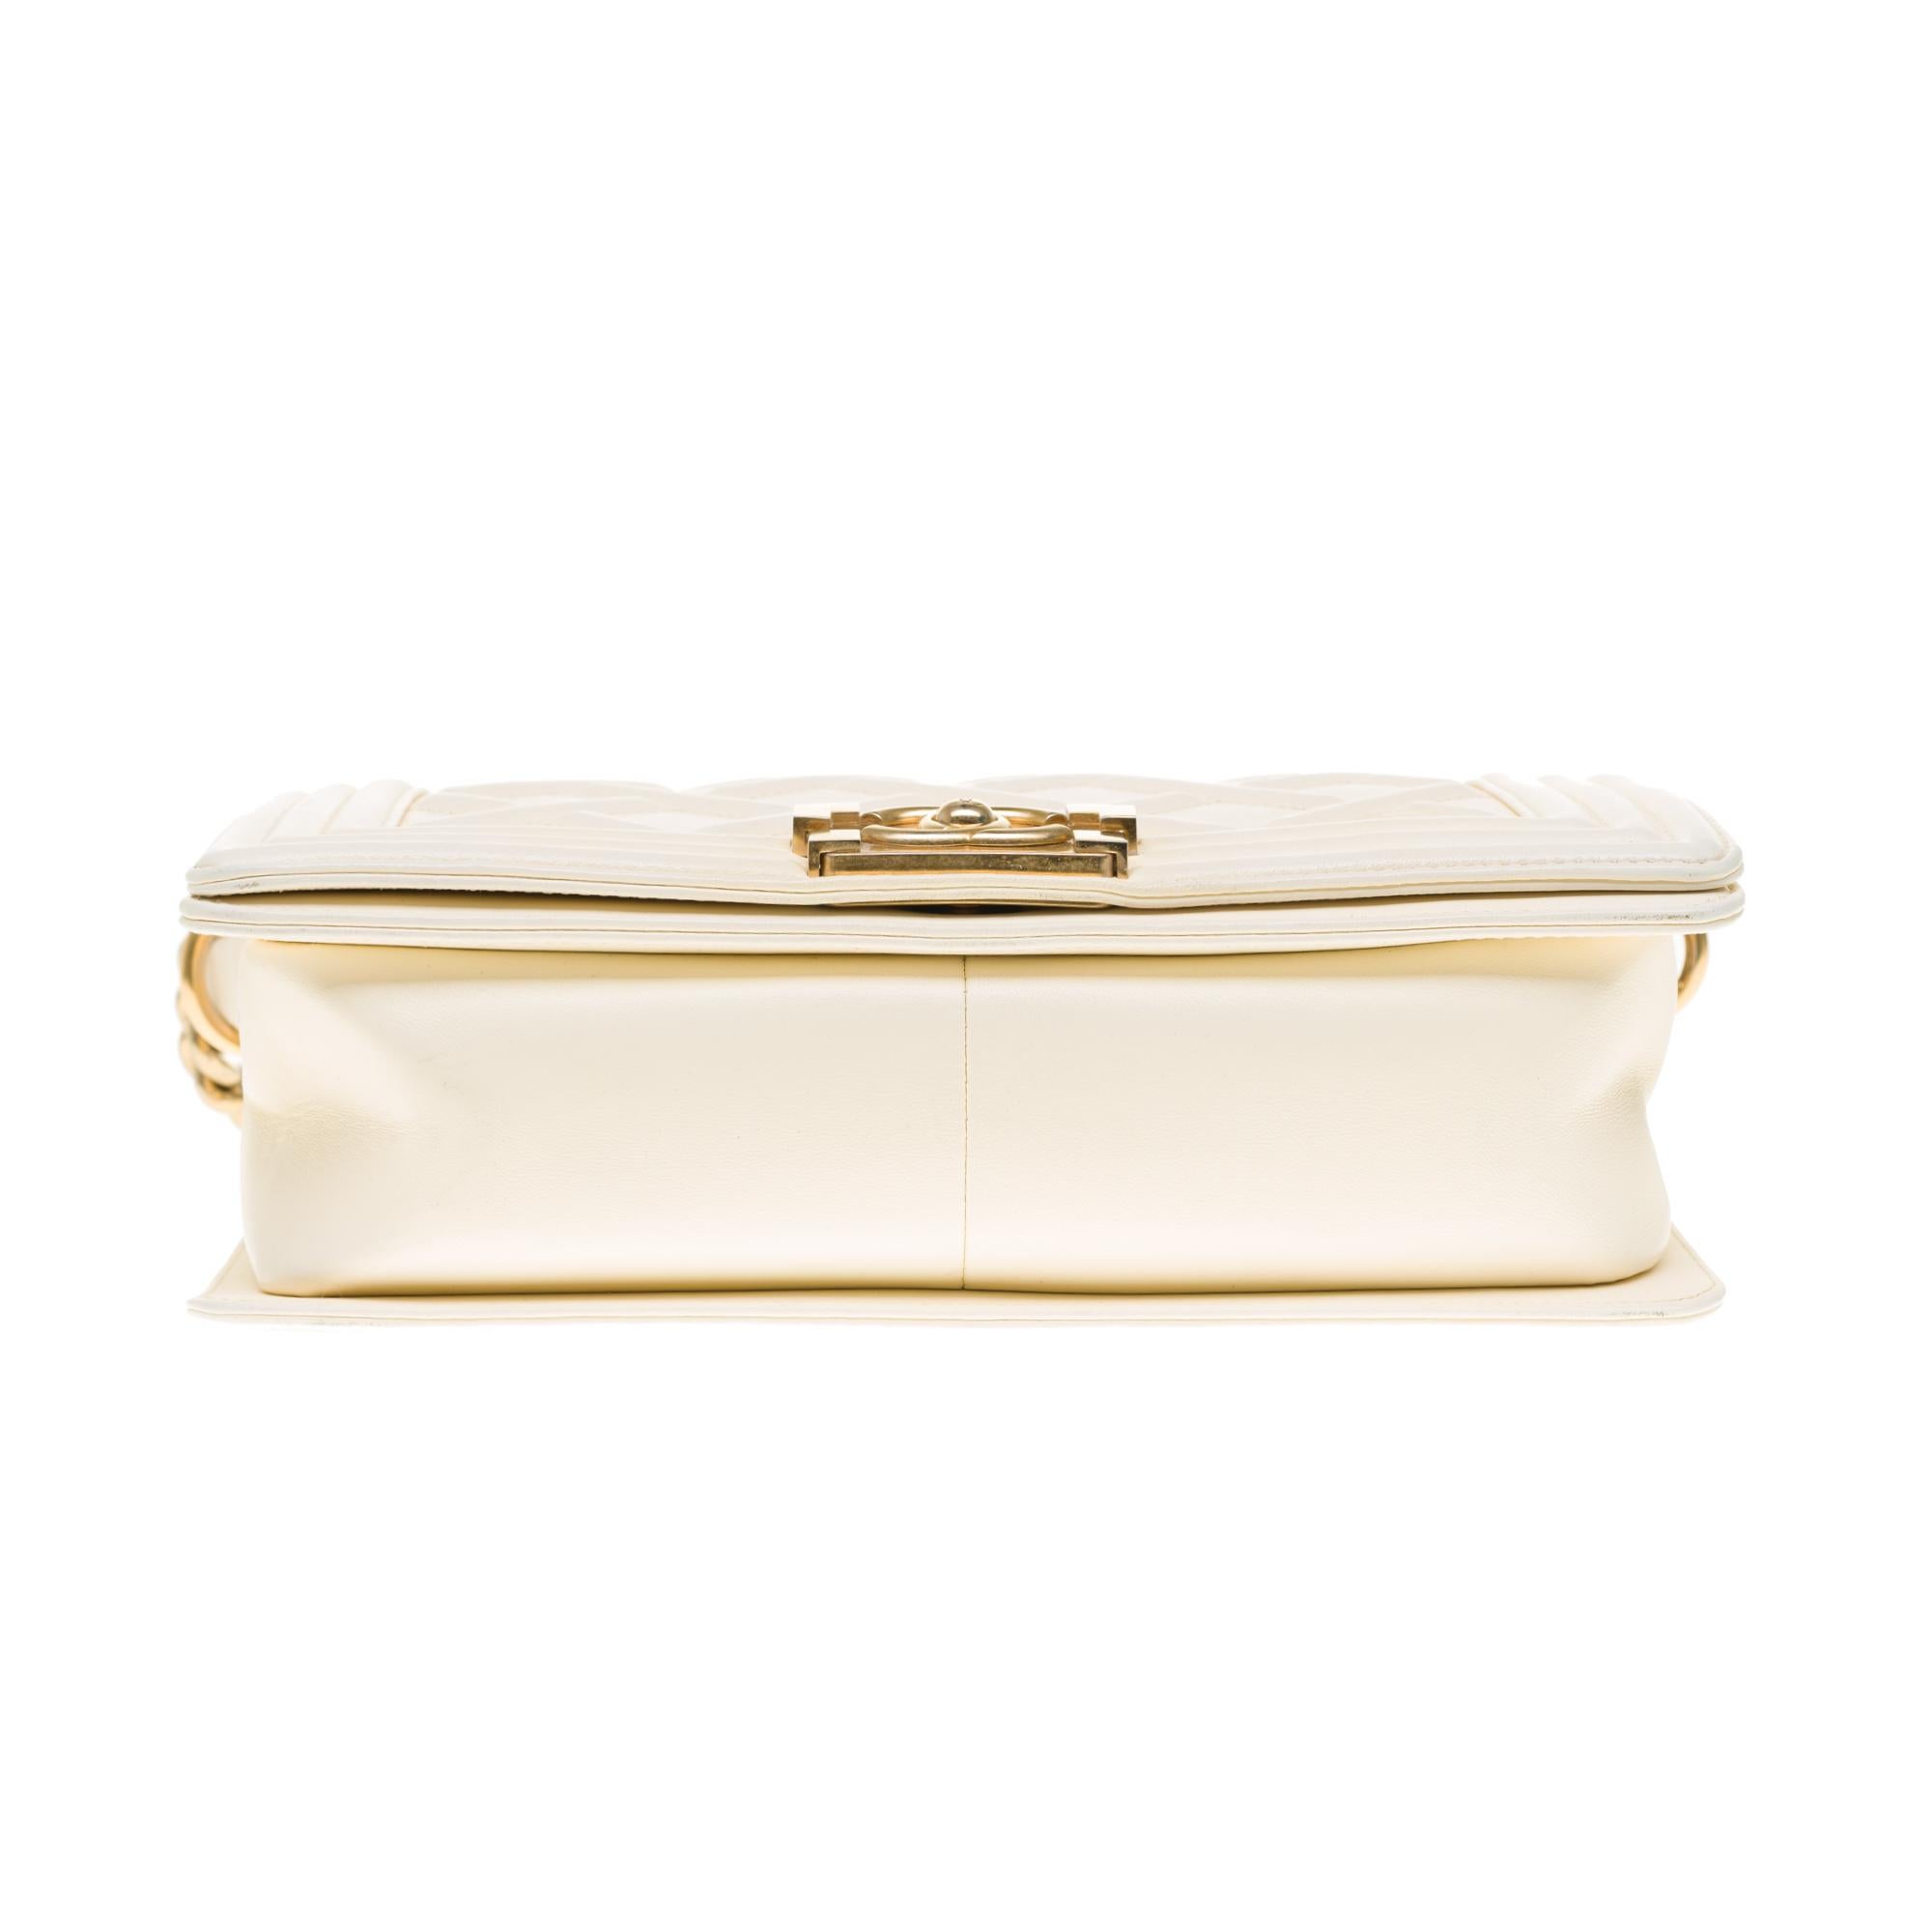 Chanel Boy Paris/Edinburgh handbag in ivory embossed leather, GHW ! 3